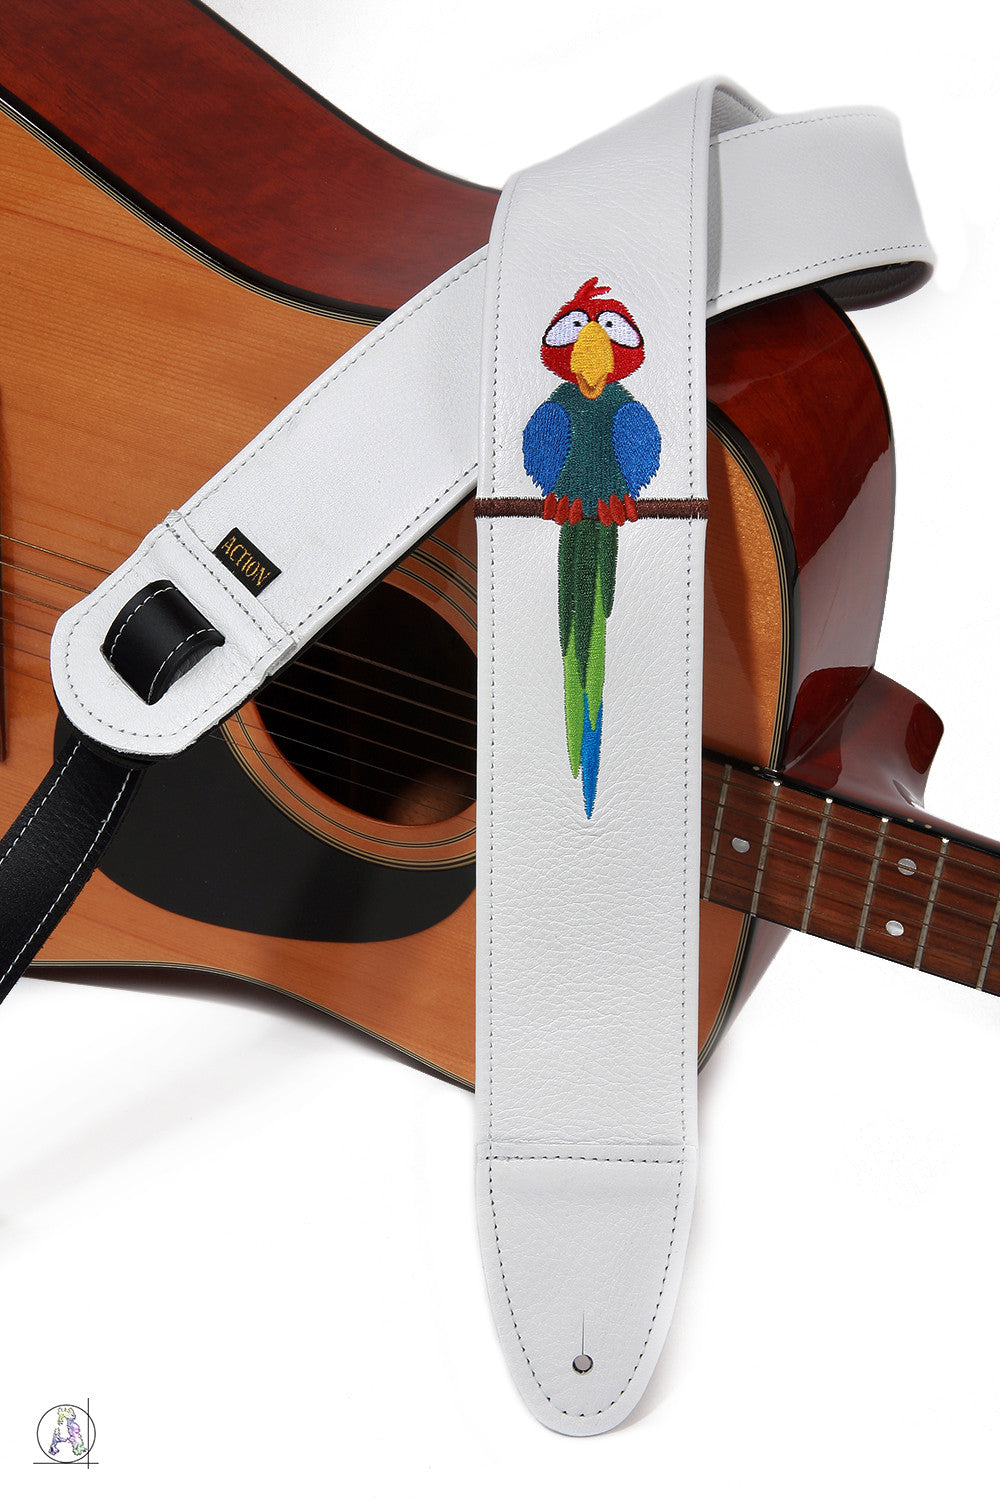 Fun Parrot on White Leather Custom Guitar Strap